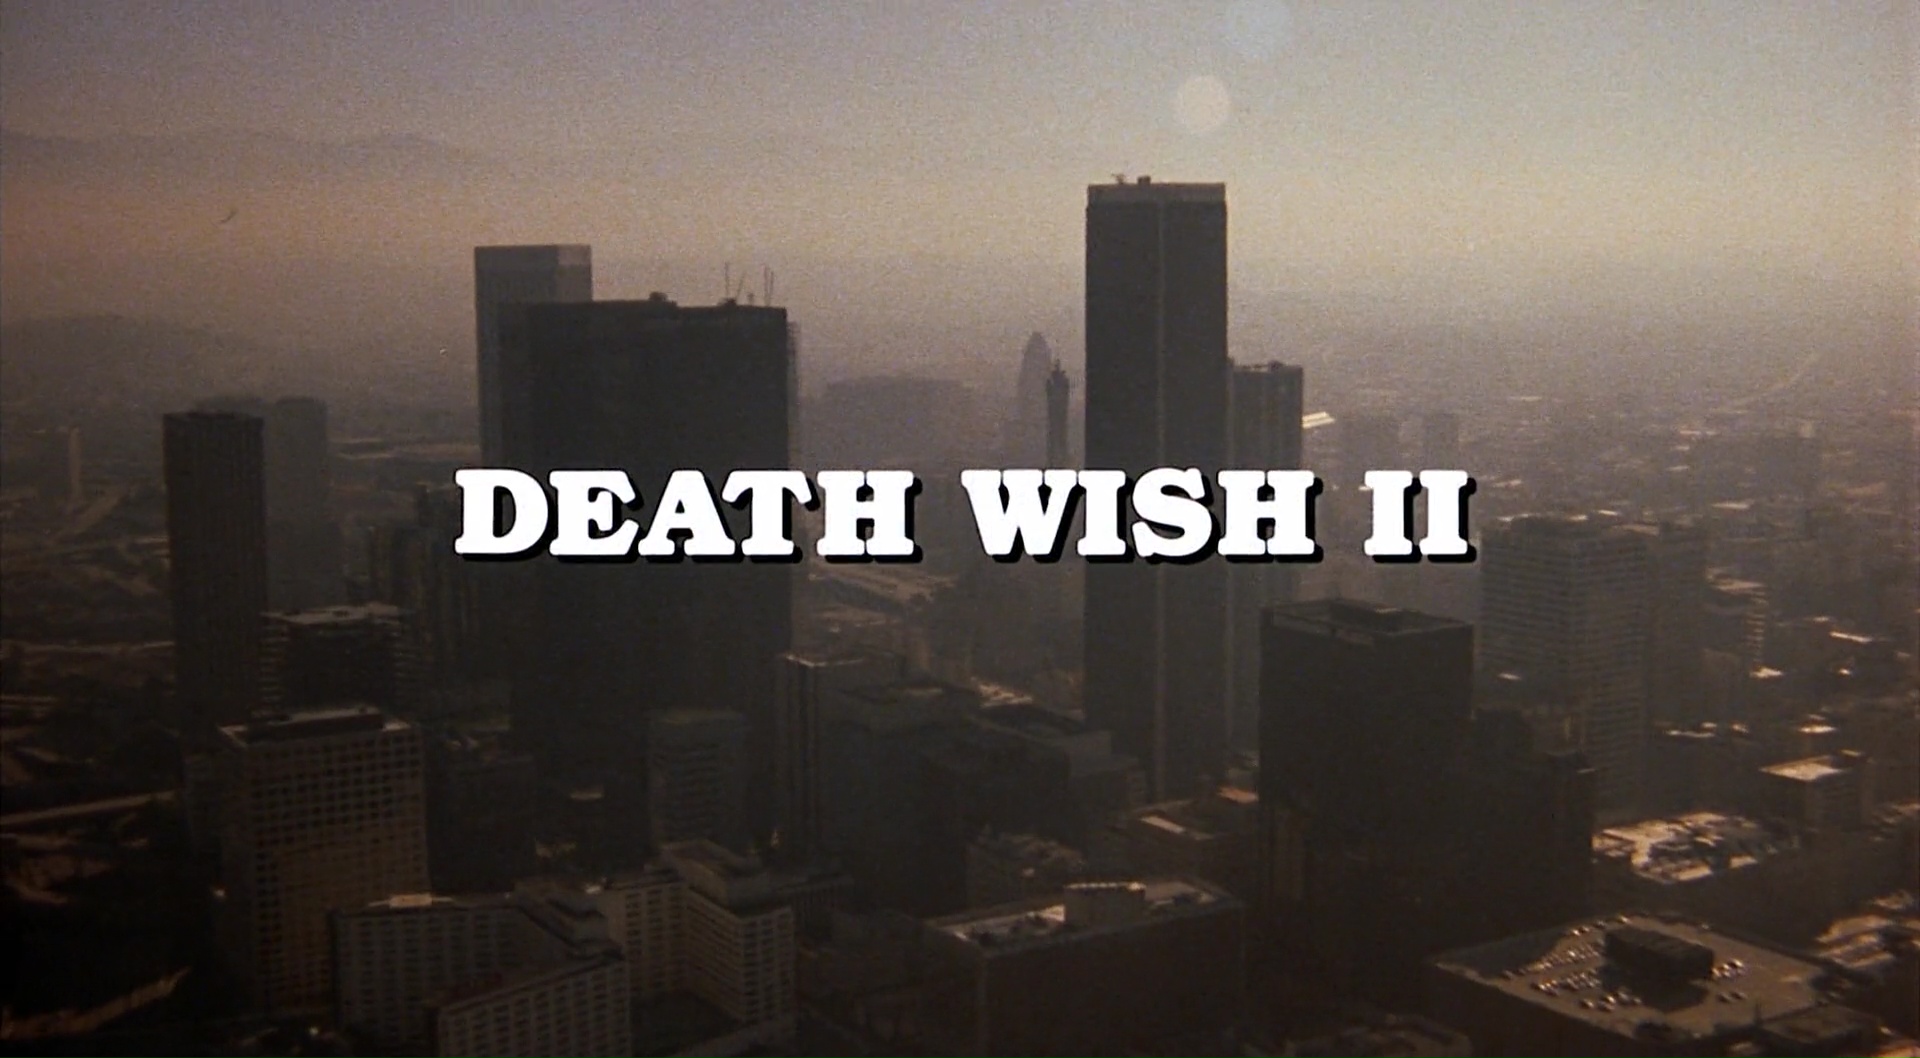 UN JUSTICIER DANS LA VILLE 2 (Death Wish II) de Michael Winner (1982)